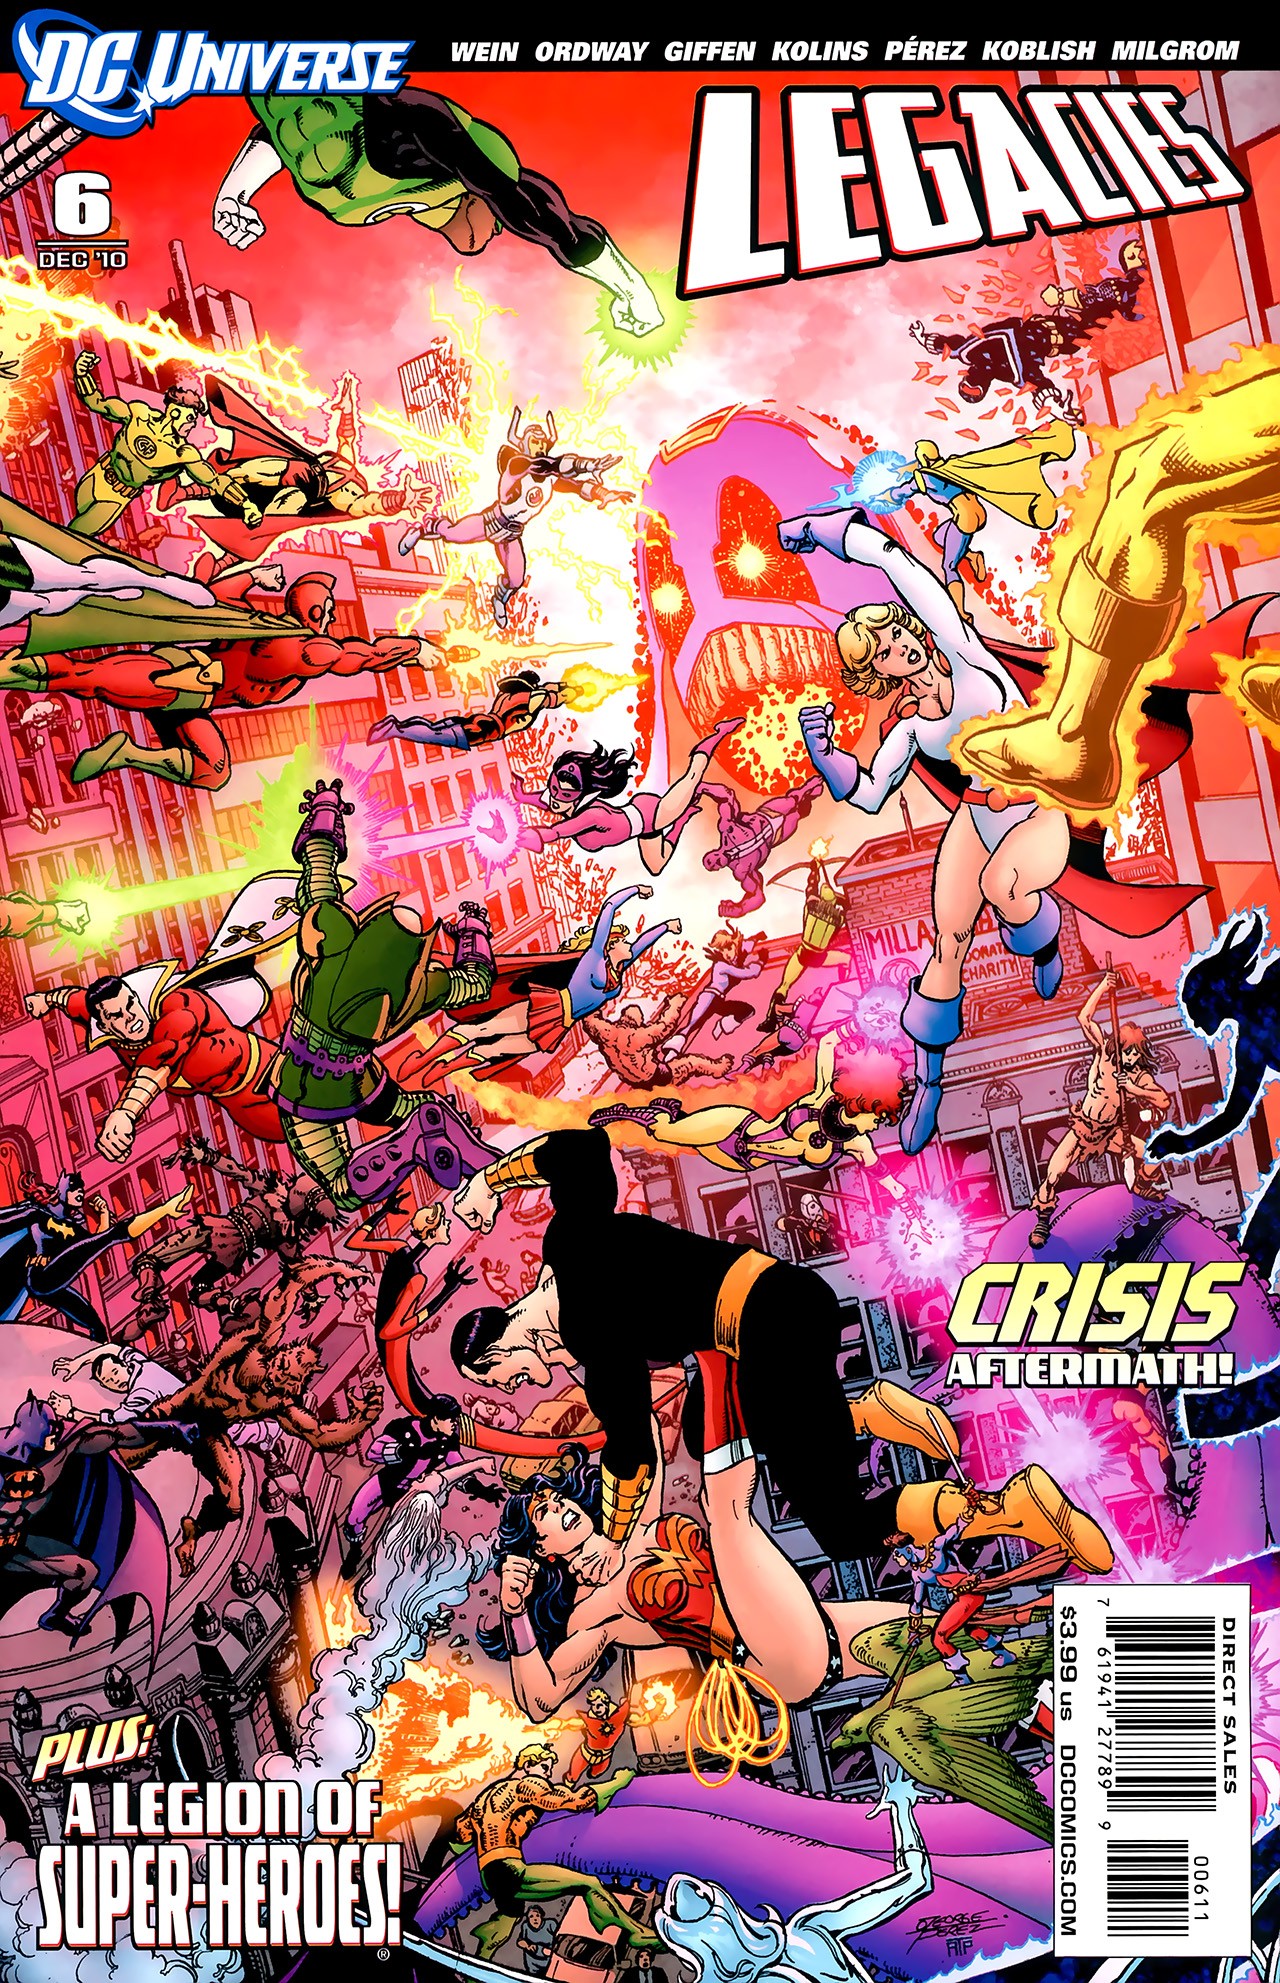 DC Universe Legacies Vol. 1 #6